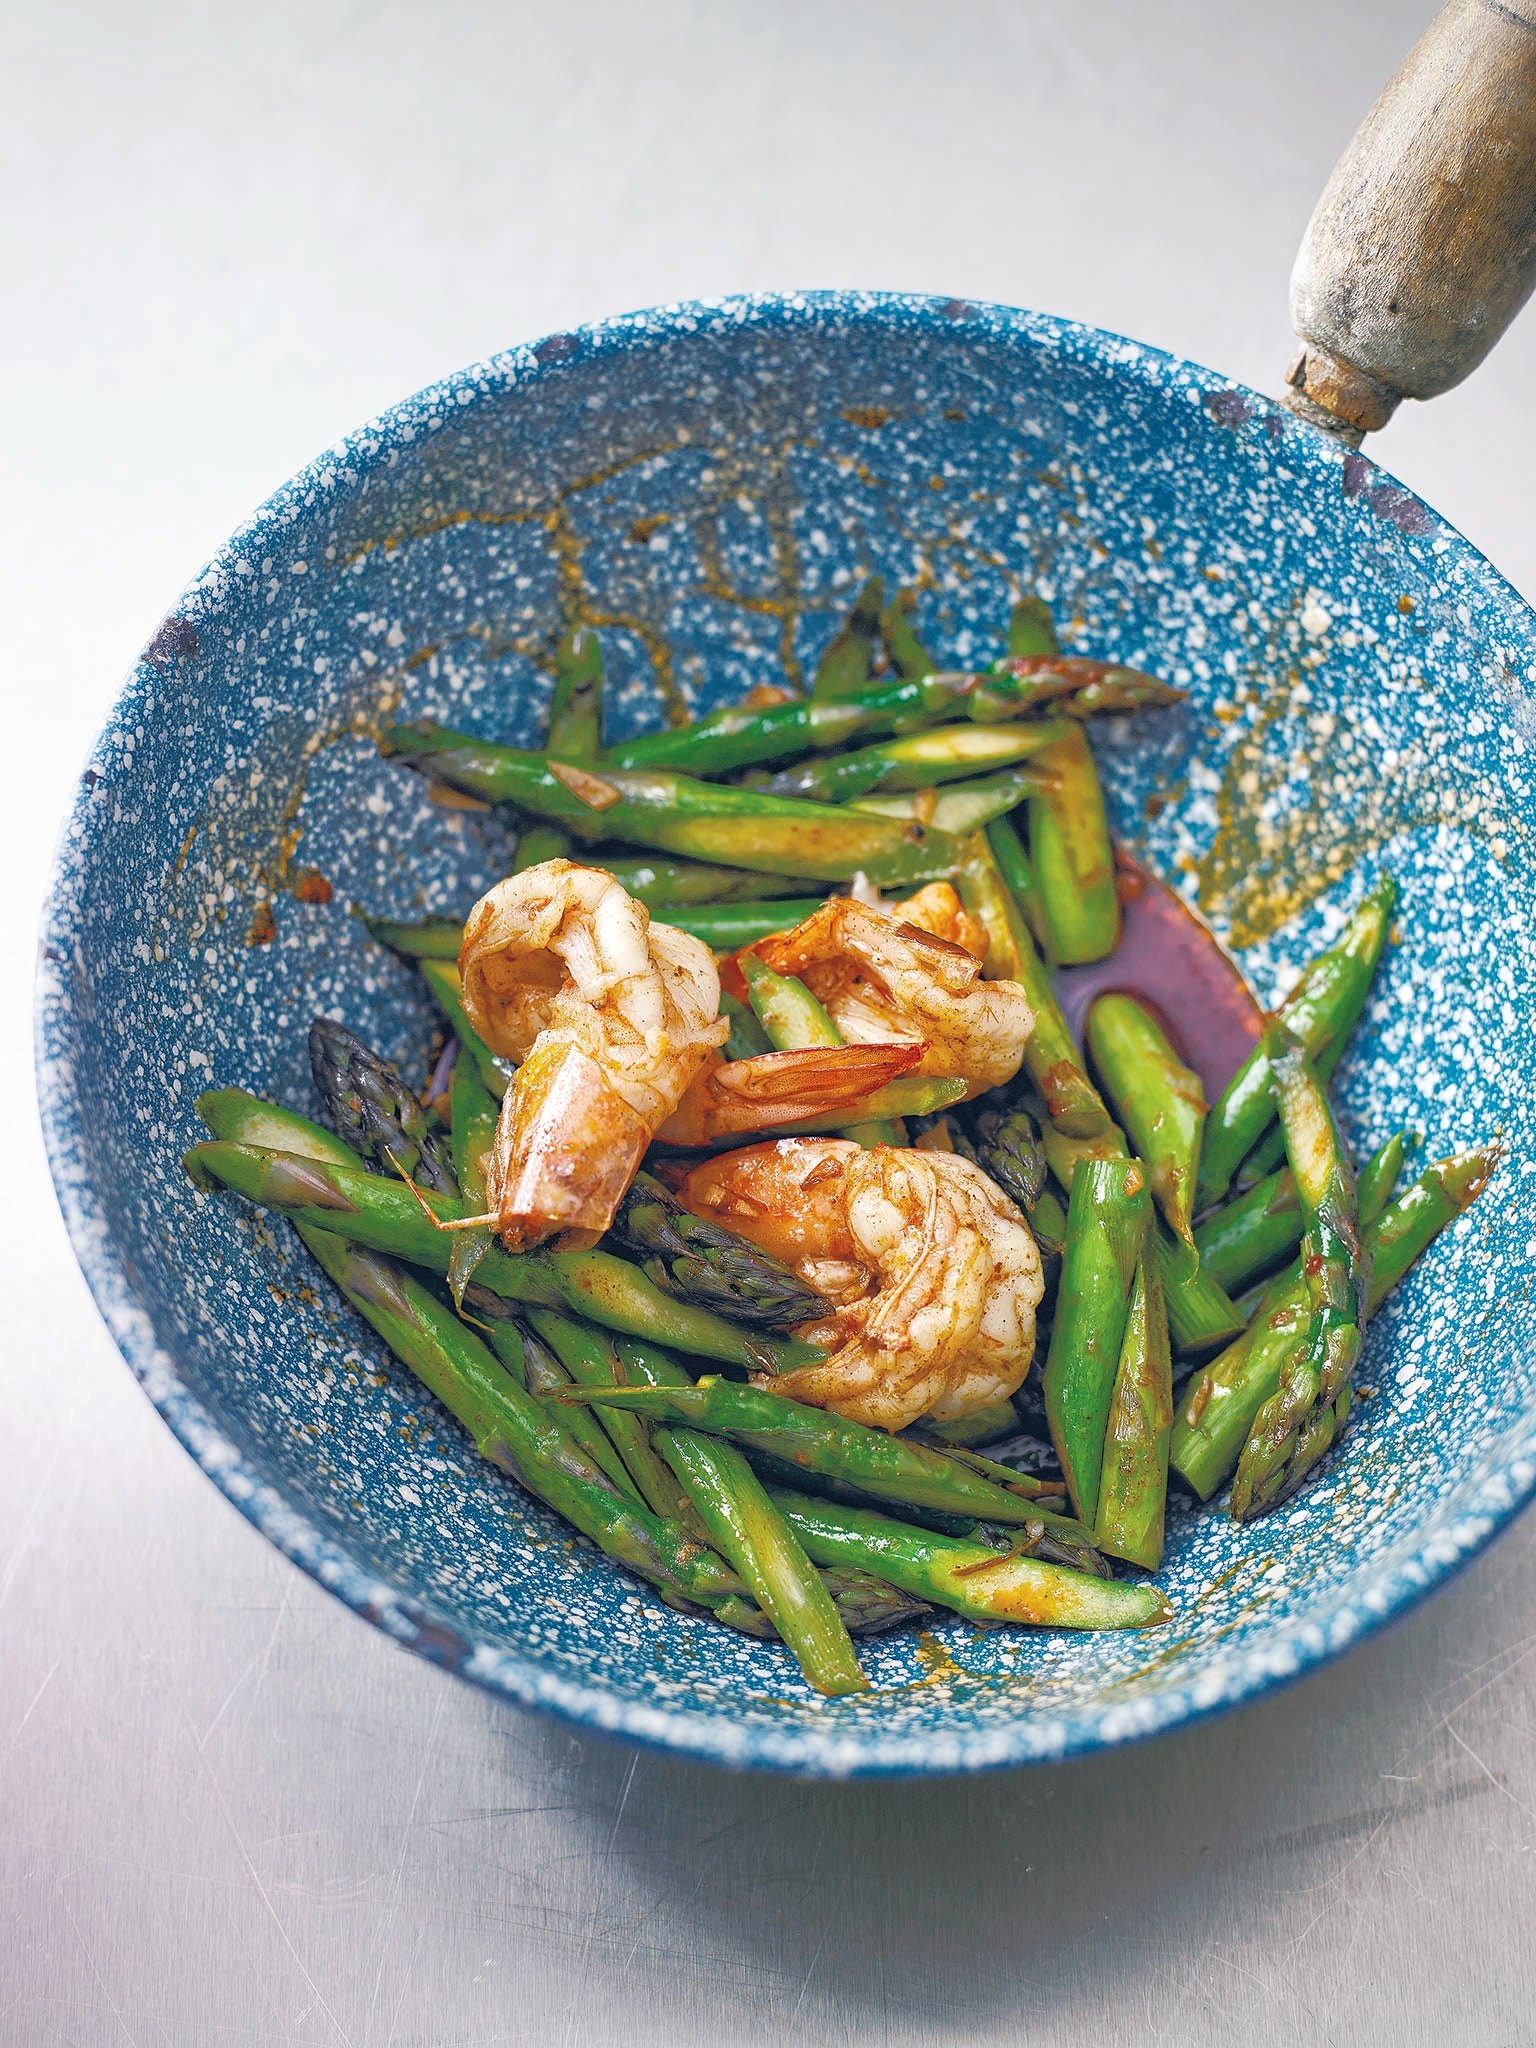 Prawn and asparagus stir fry